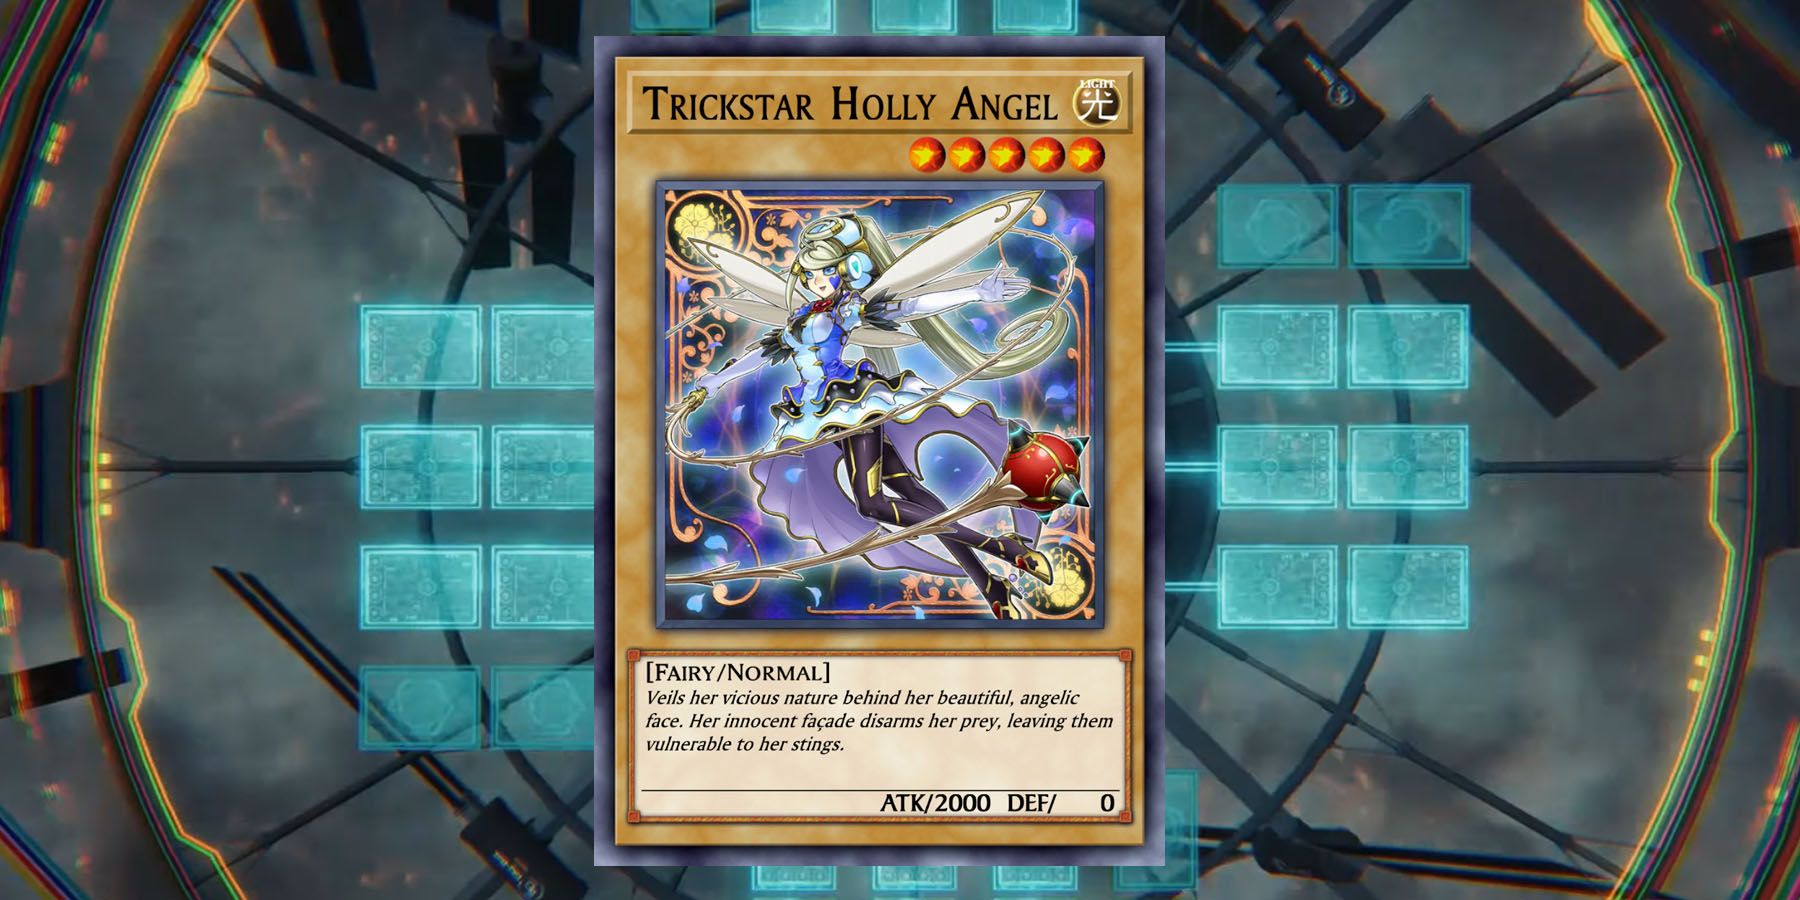 Trickstar Holly Angel